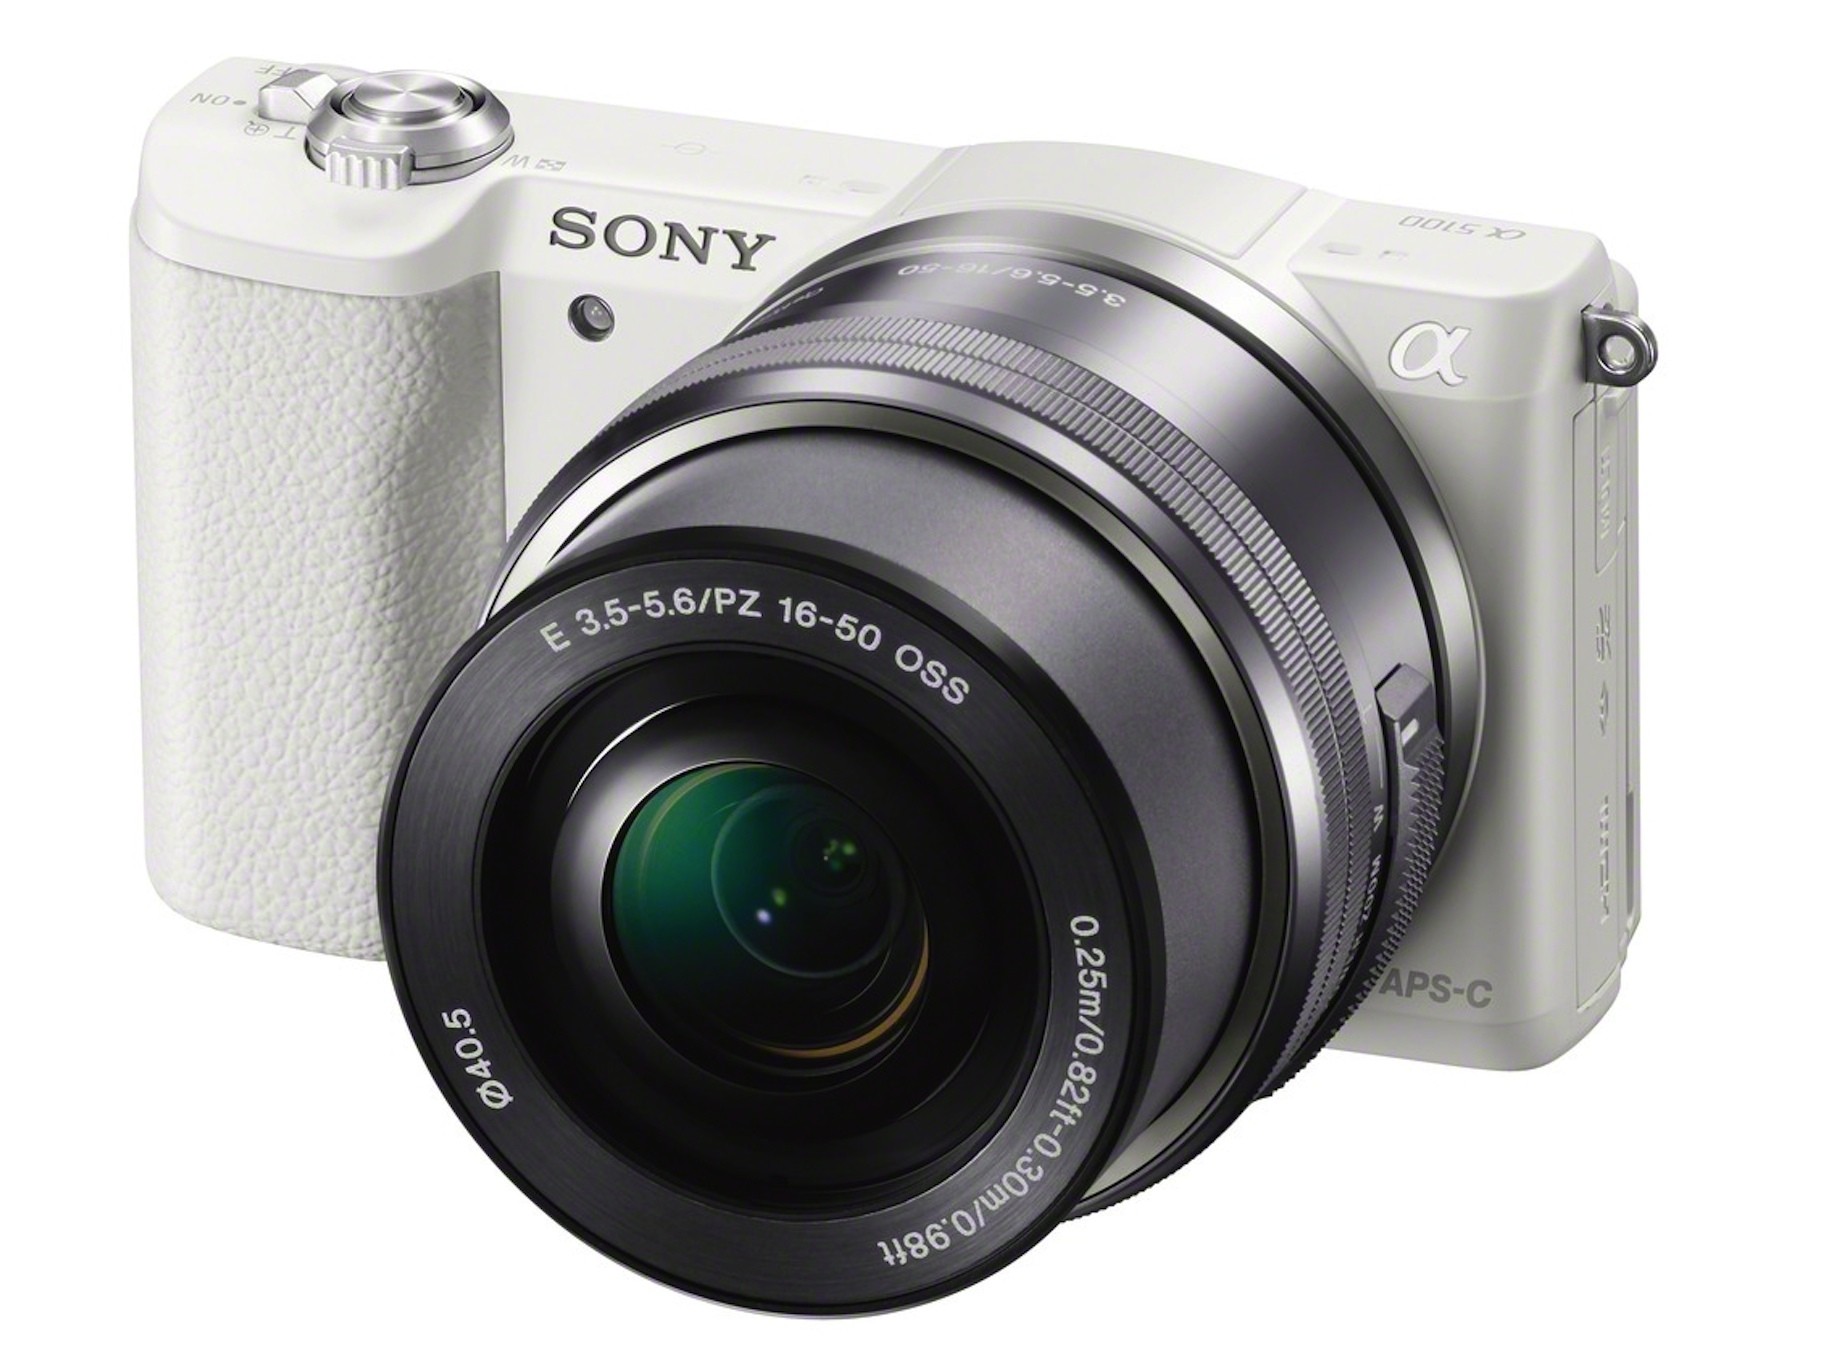 Sony-A5100-Tinniest-APS-C-Interchangeable-Lens-Camera-Gets-Hybrid-AF-System-455330-6.jpg